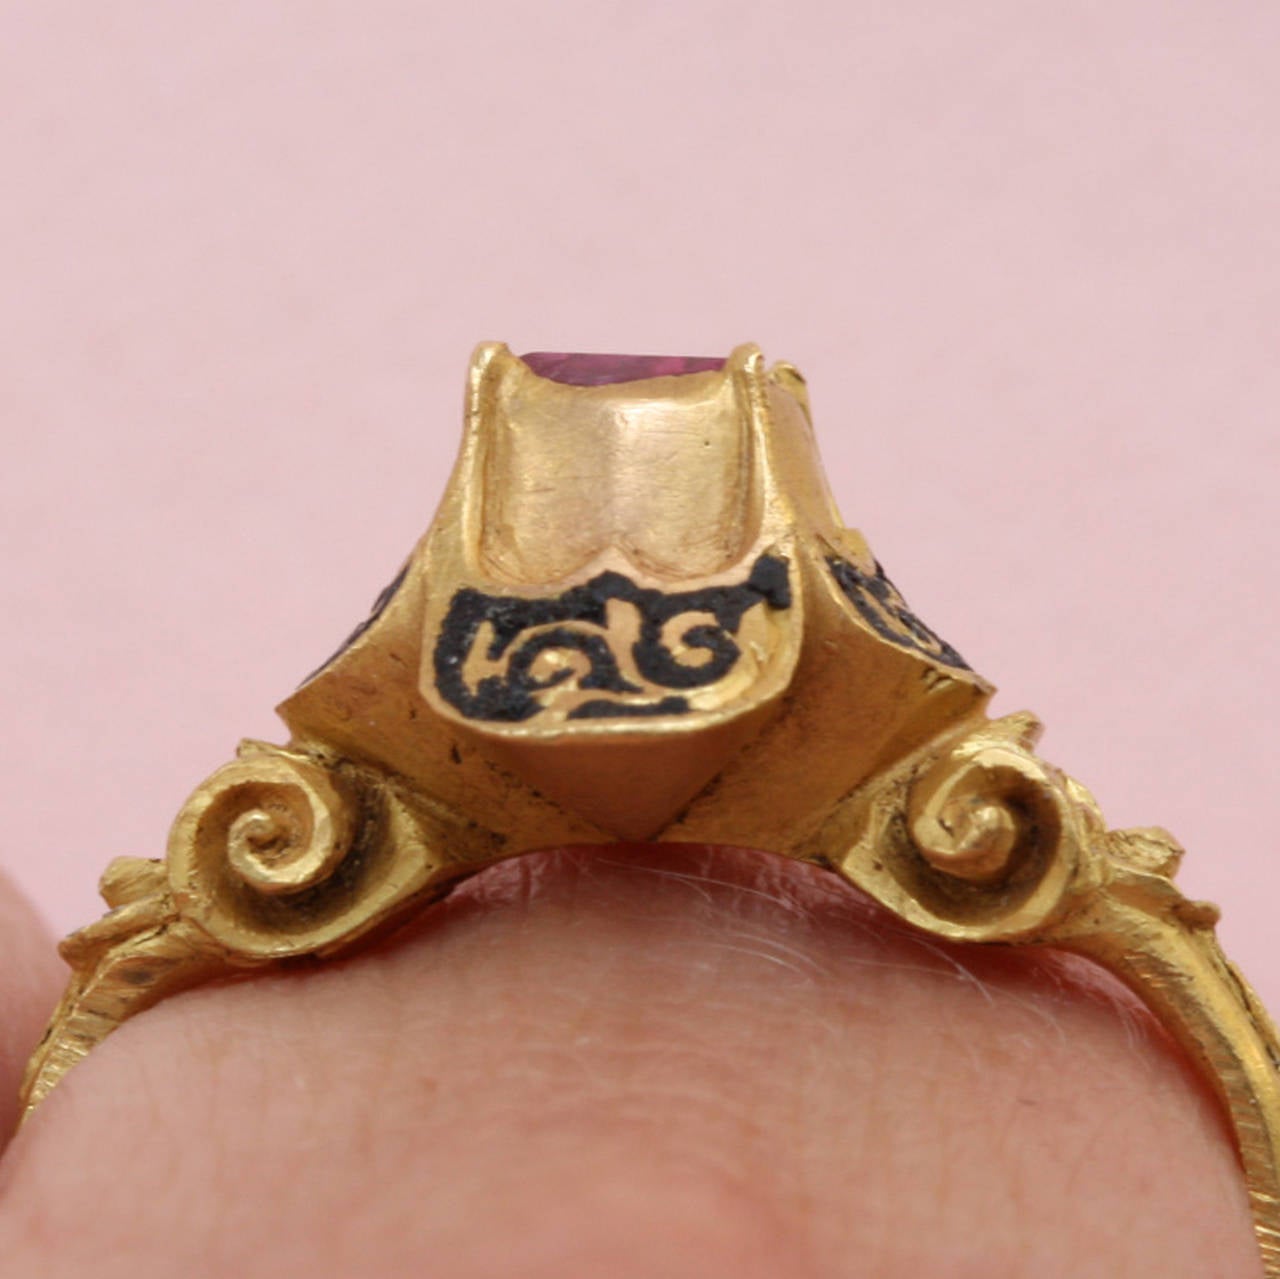 16th century wedding rings